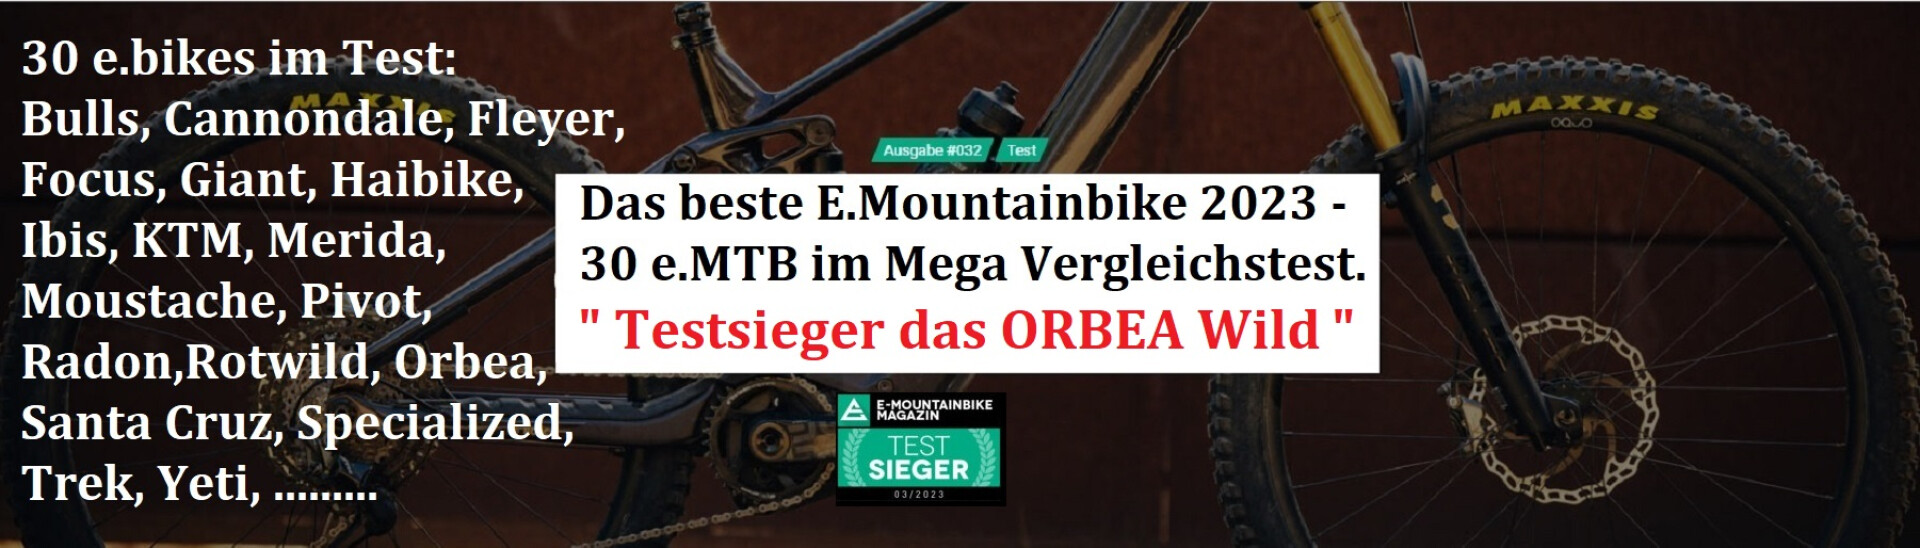 ORBEA Wild Testsieger 2023" 